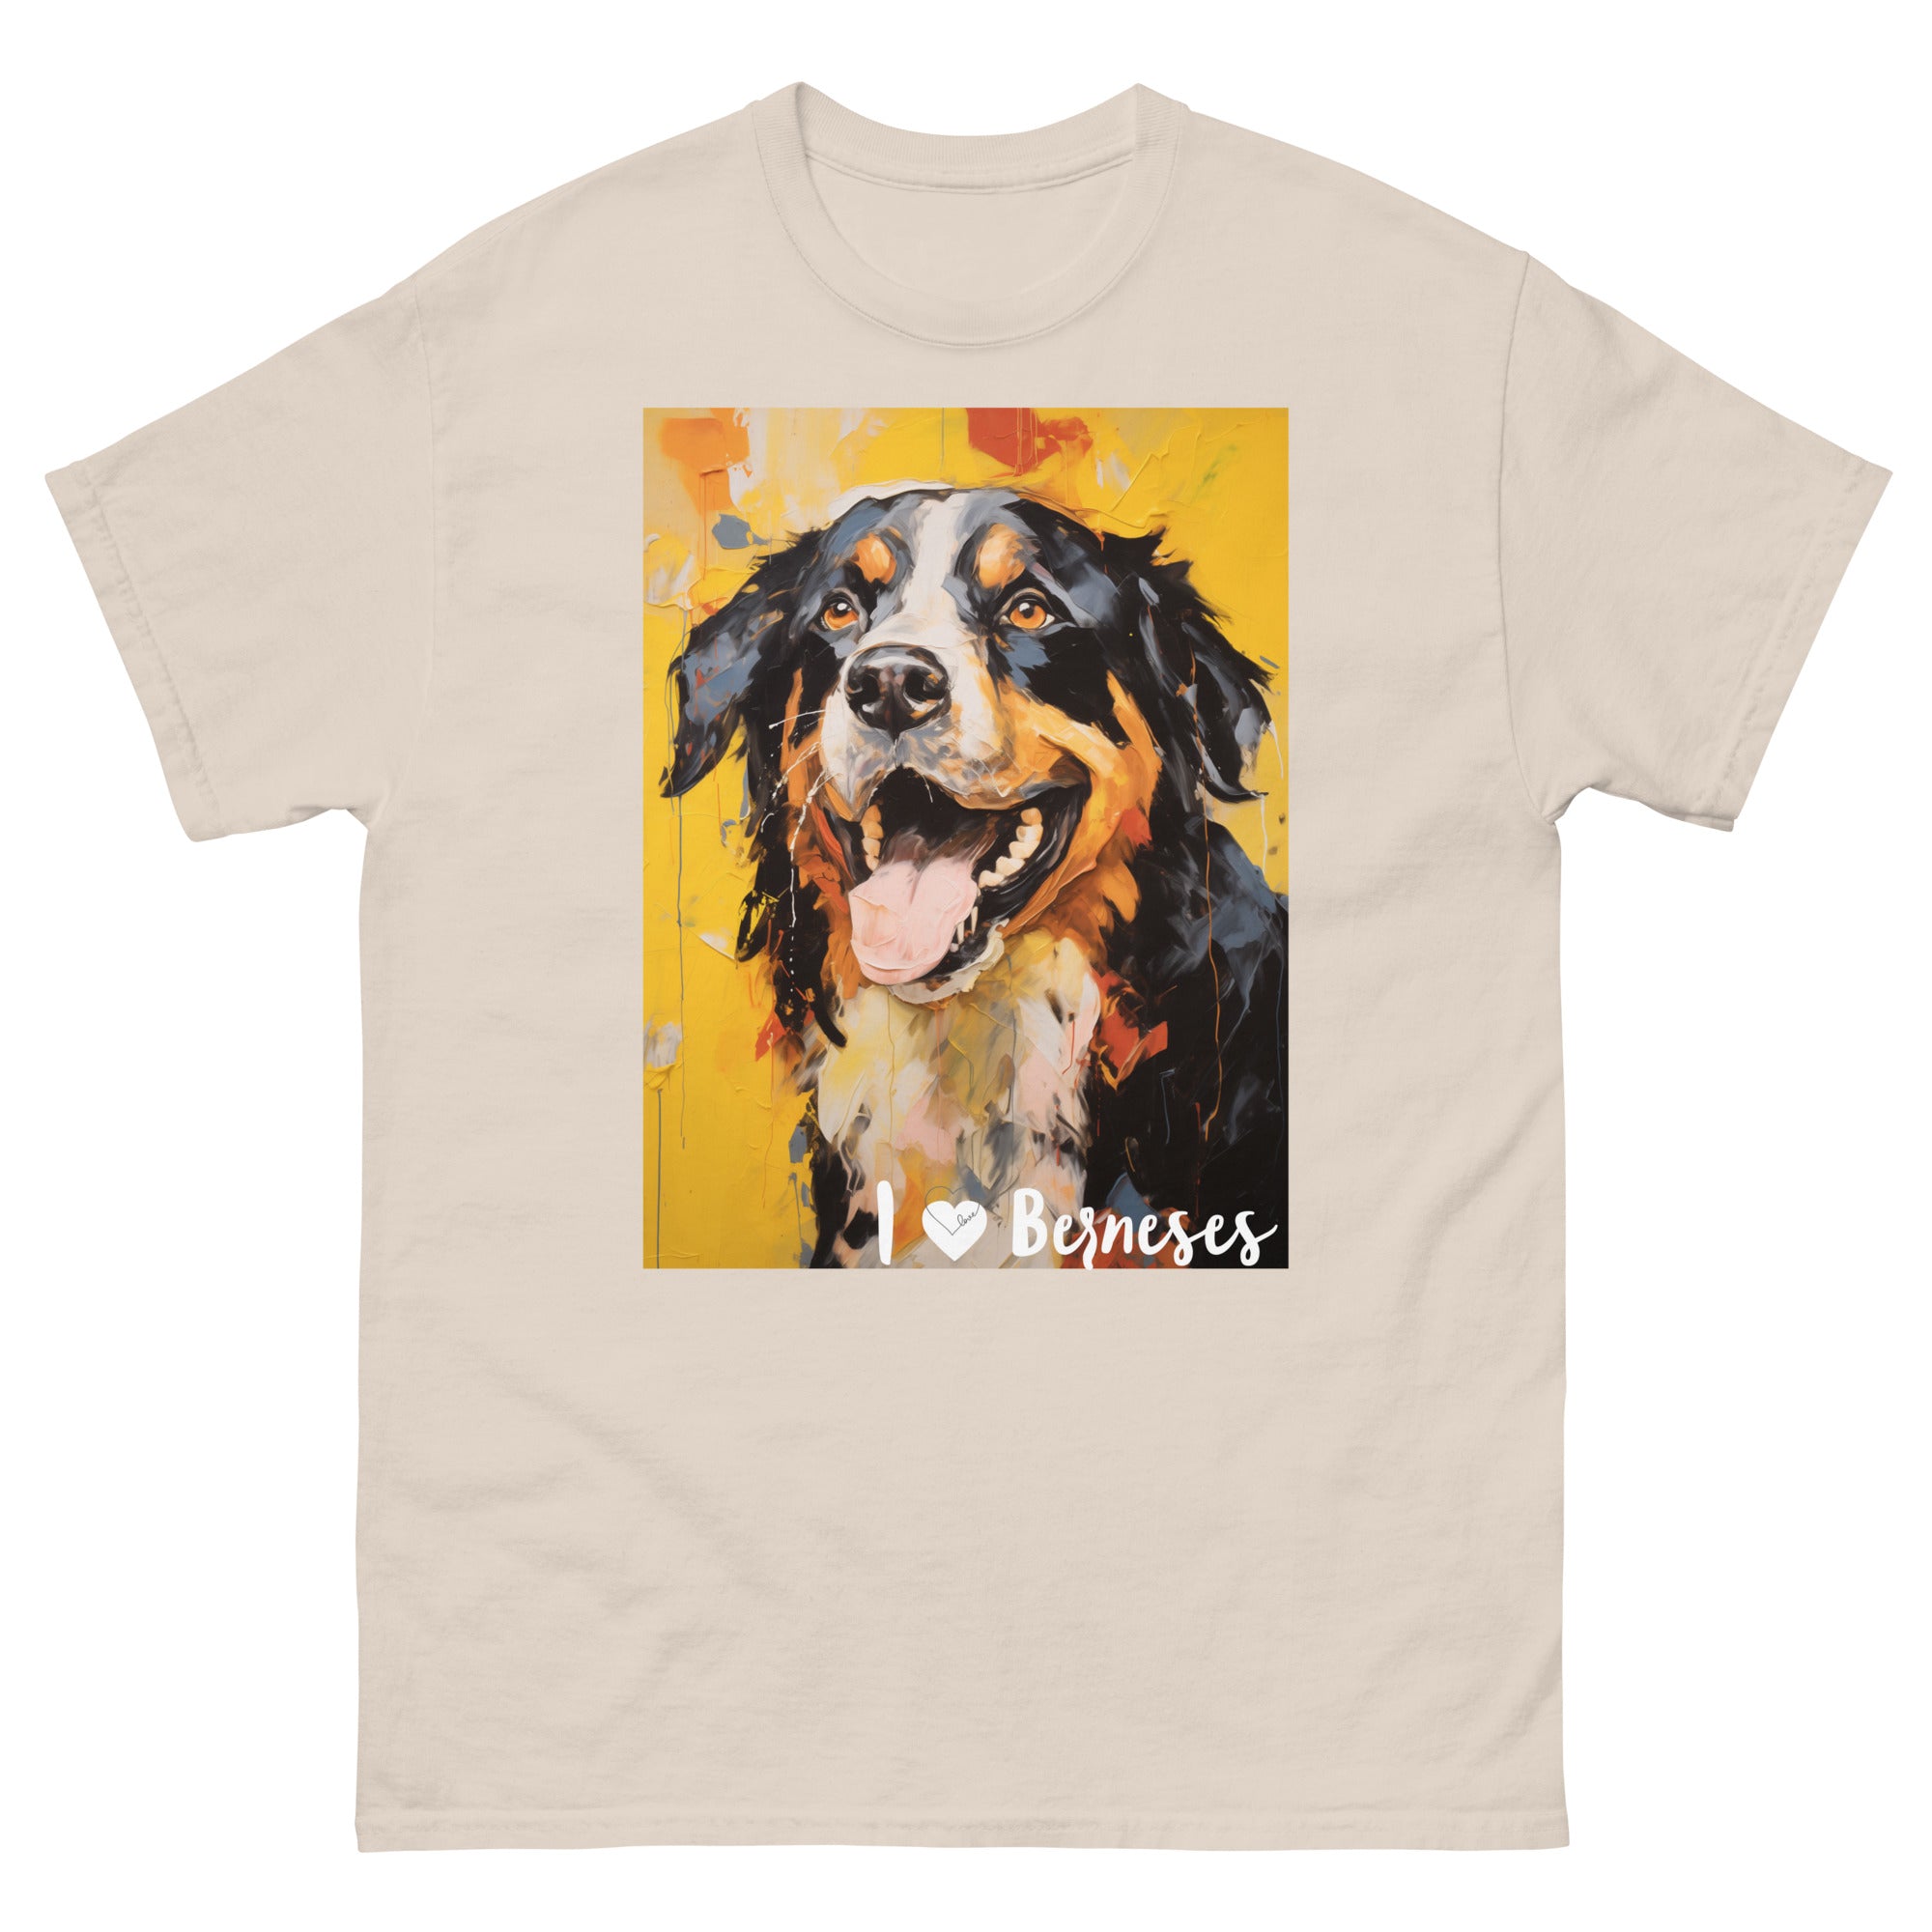 Men's classic tee - I ❤ DOGS - Bernese Mountain Dog